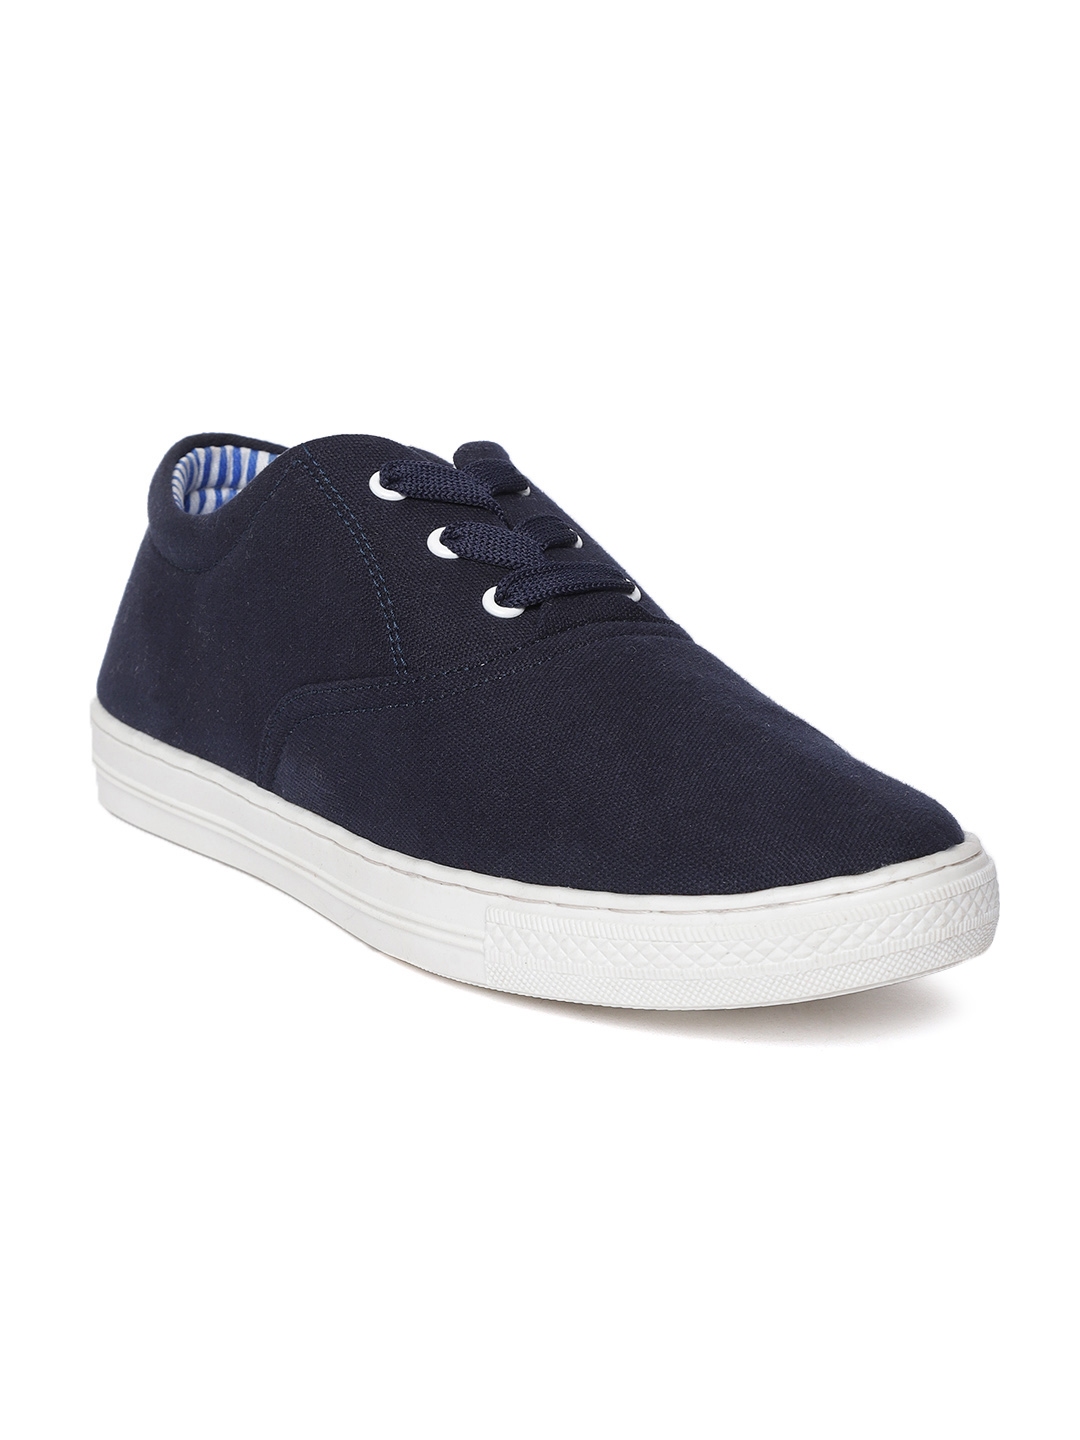 Buy Mocas Men Navy Blue Sneakers - Casual Shoes for Men 8826871 | Myntra